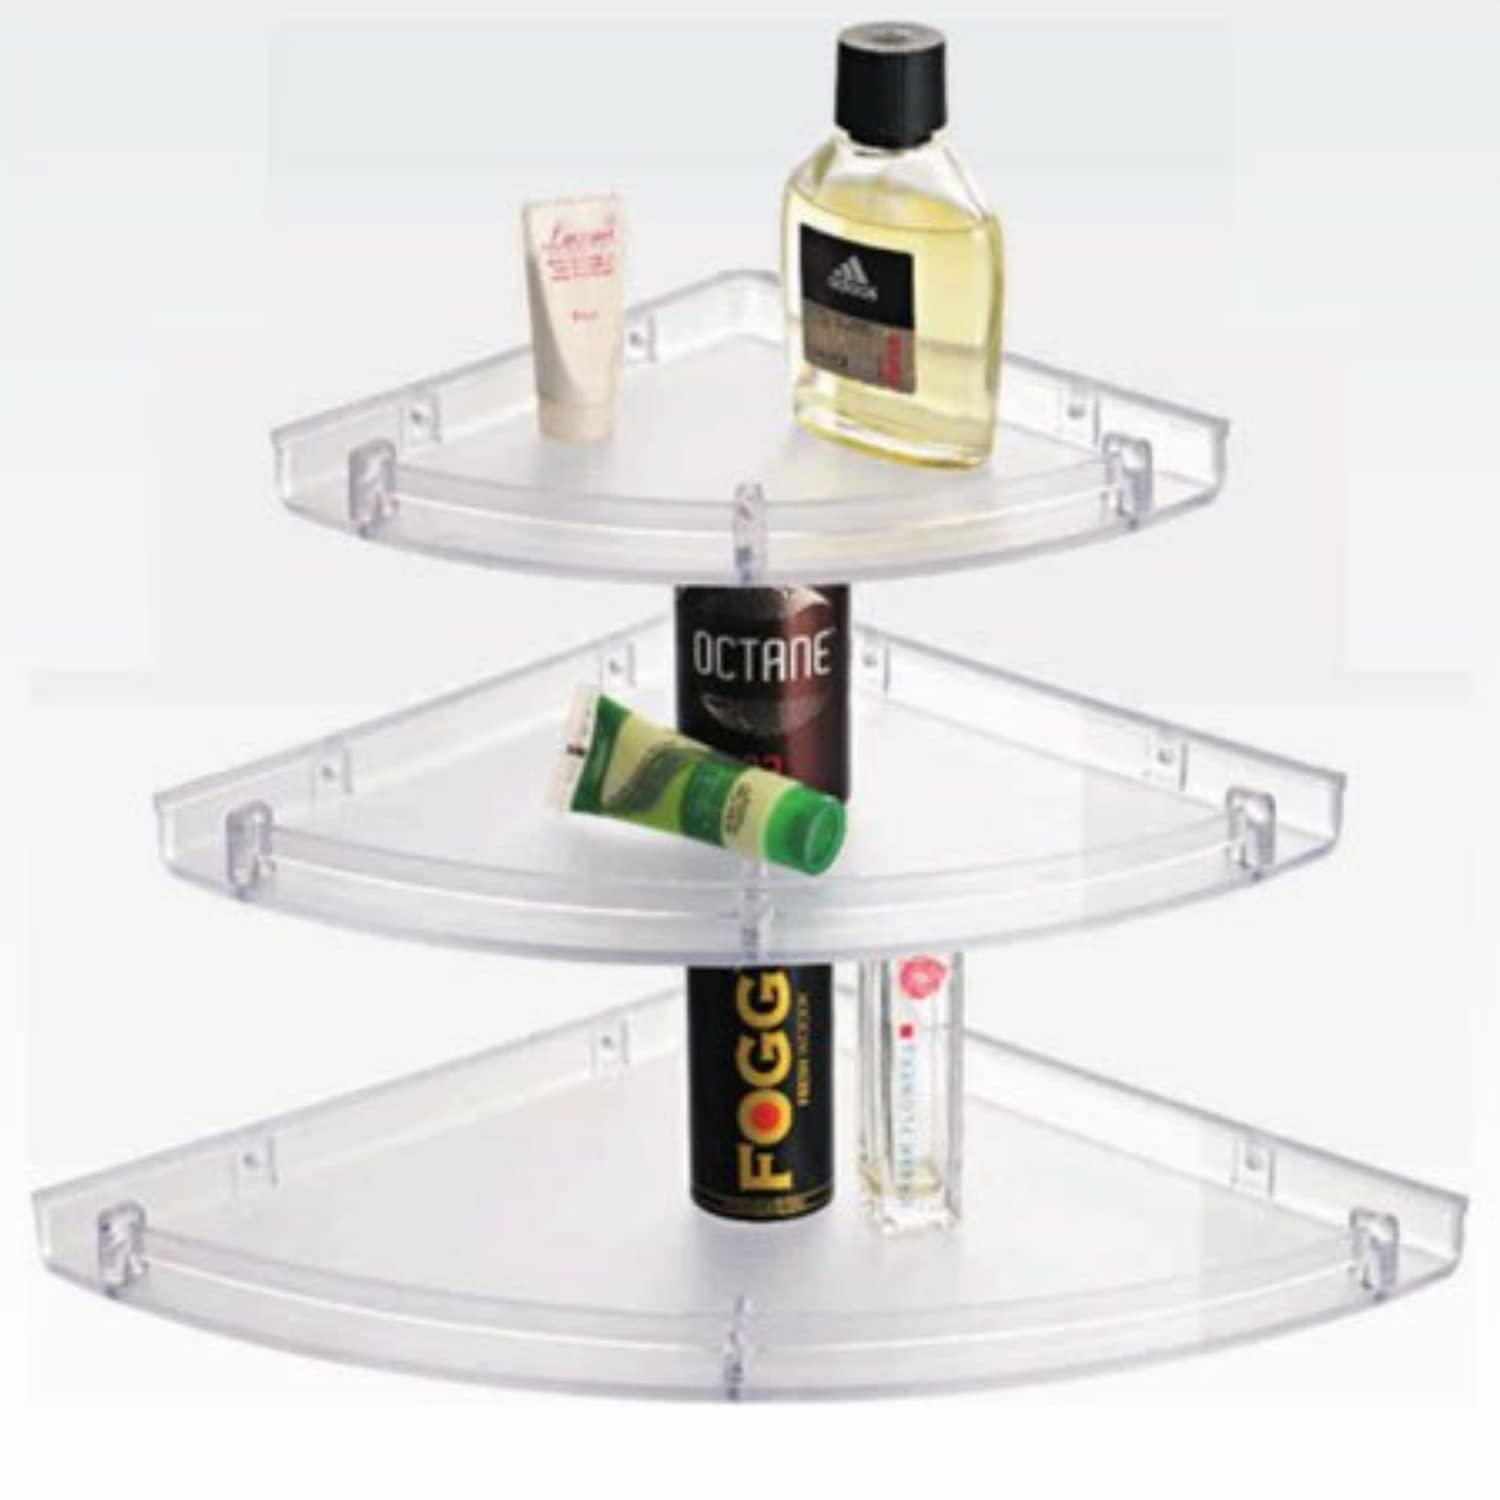 Acrylic corner shelf cm 20x20 double shelf model for shower.